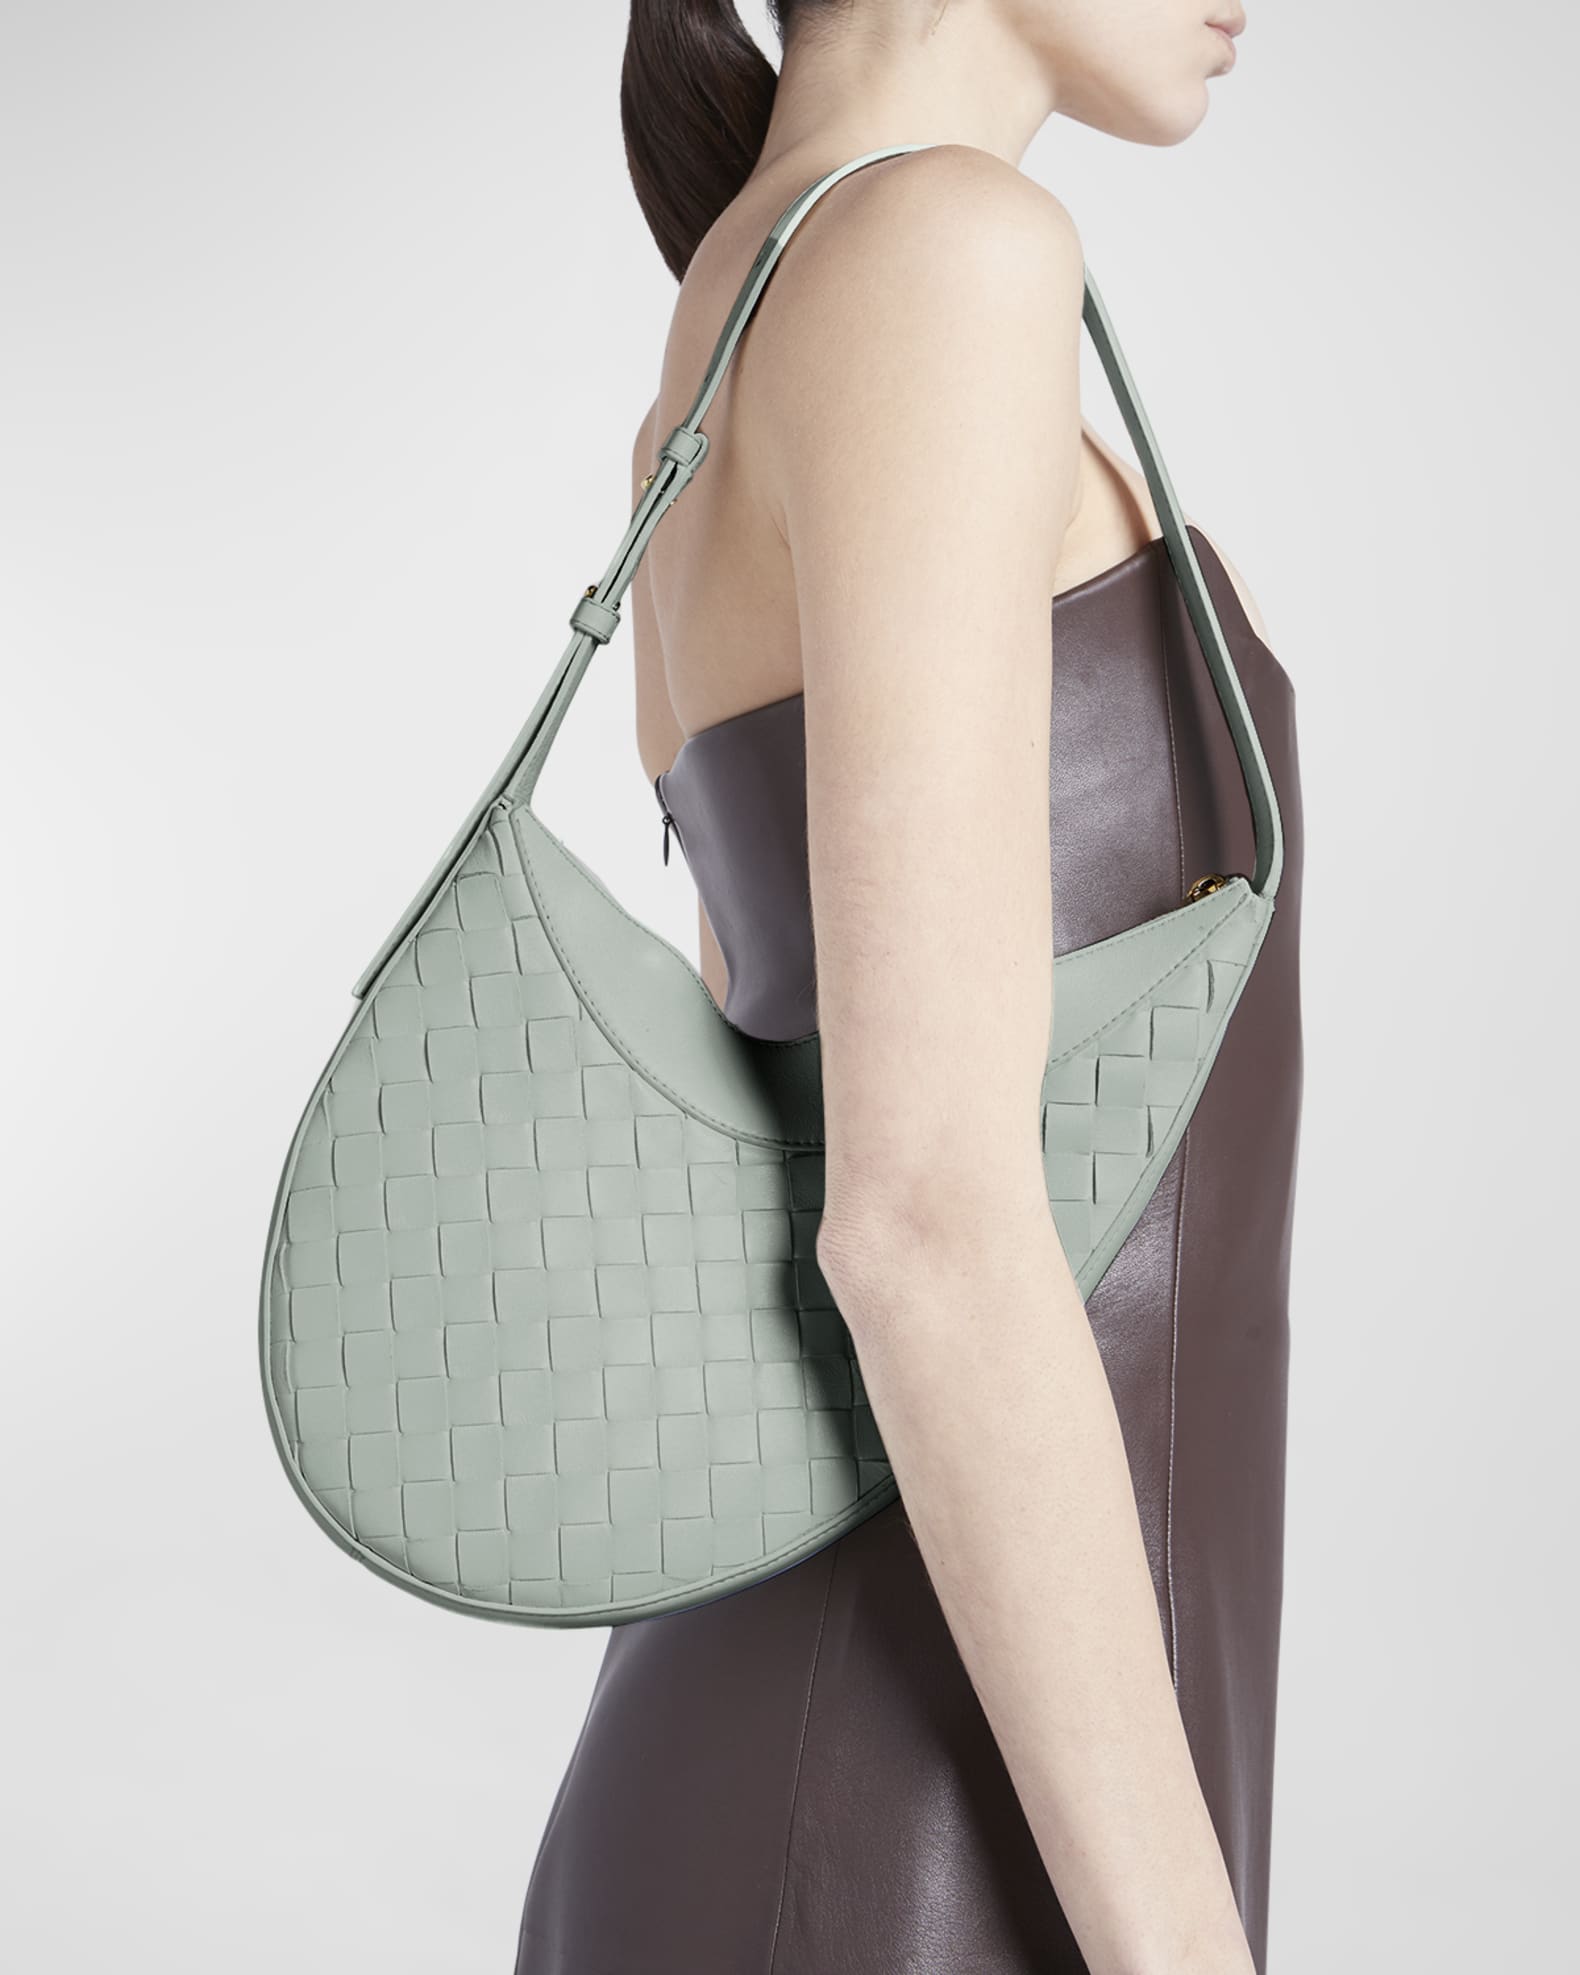 Bottega Veneta Intrecciato Nodini Bag - Brown Shoulder Bags, Handbags -  BOT218398